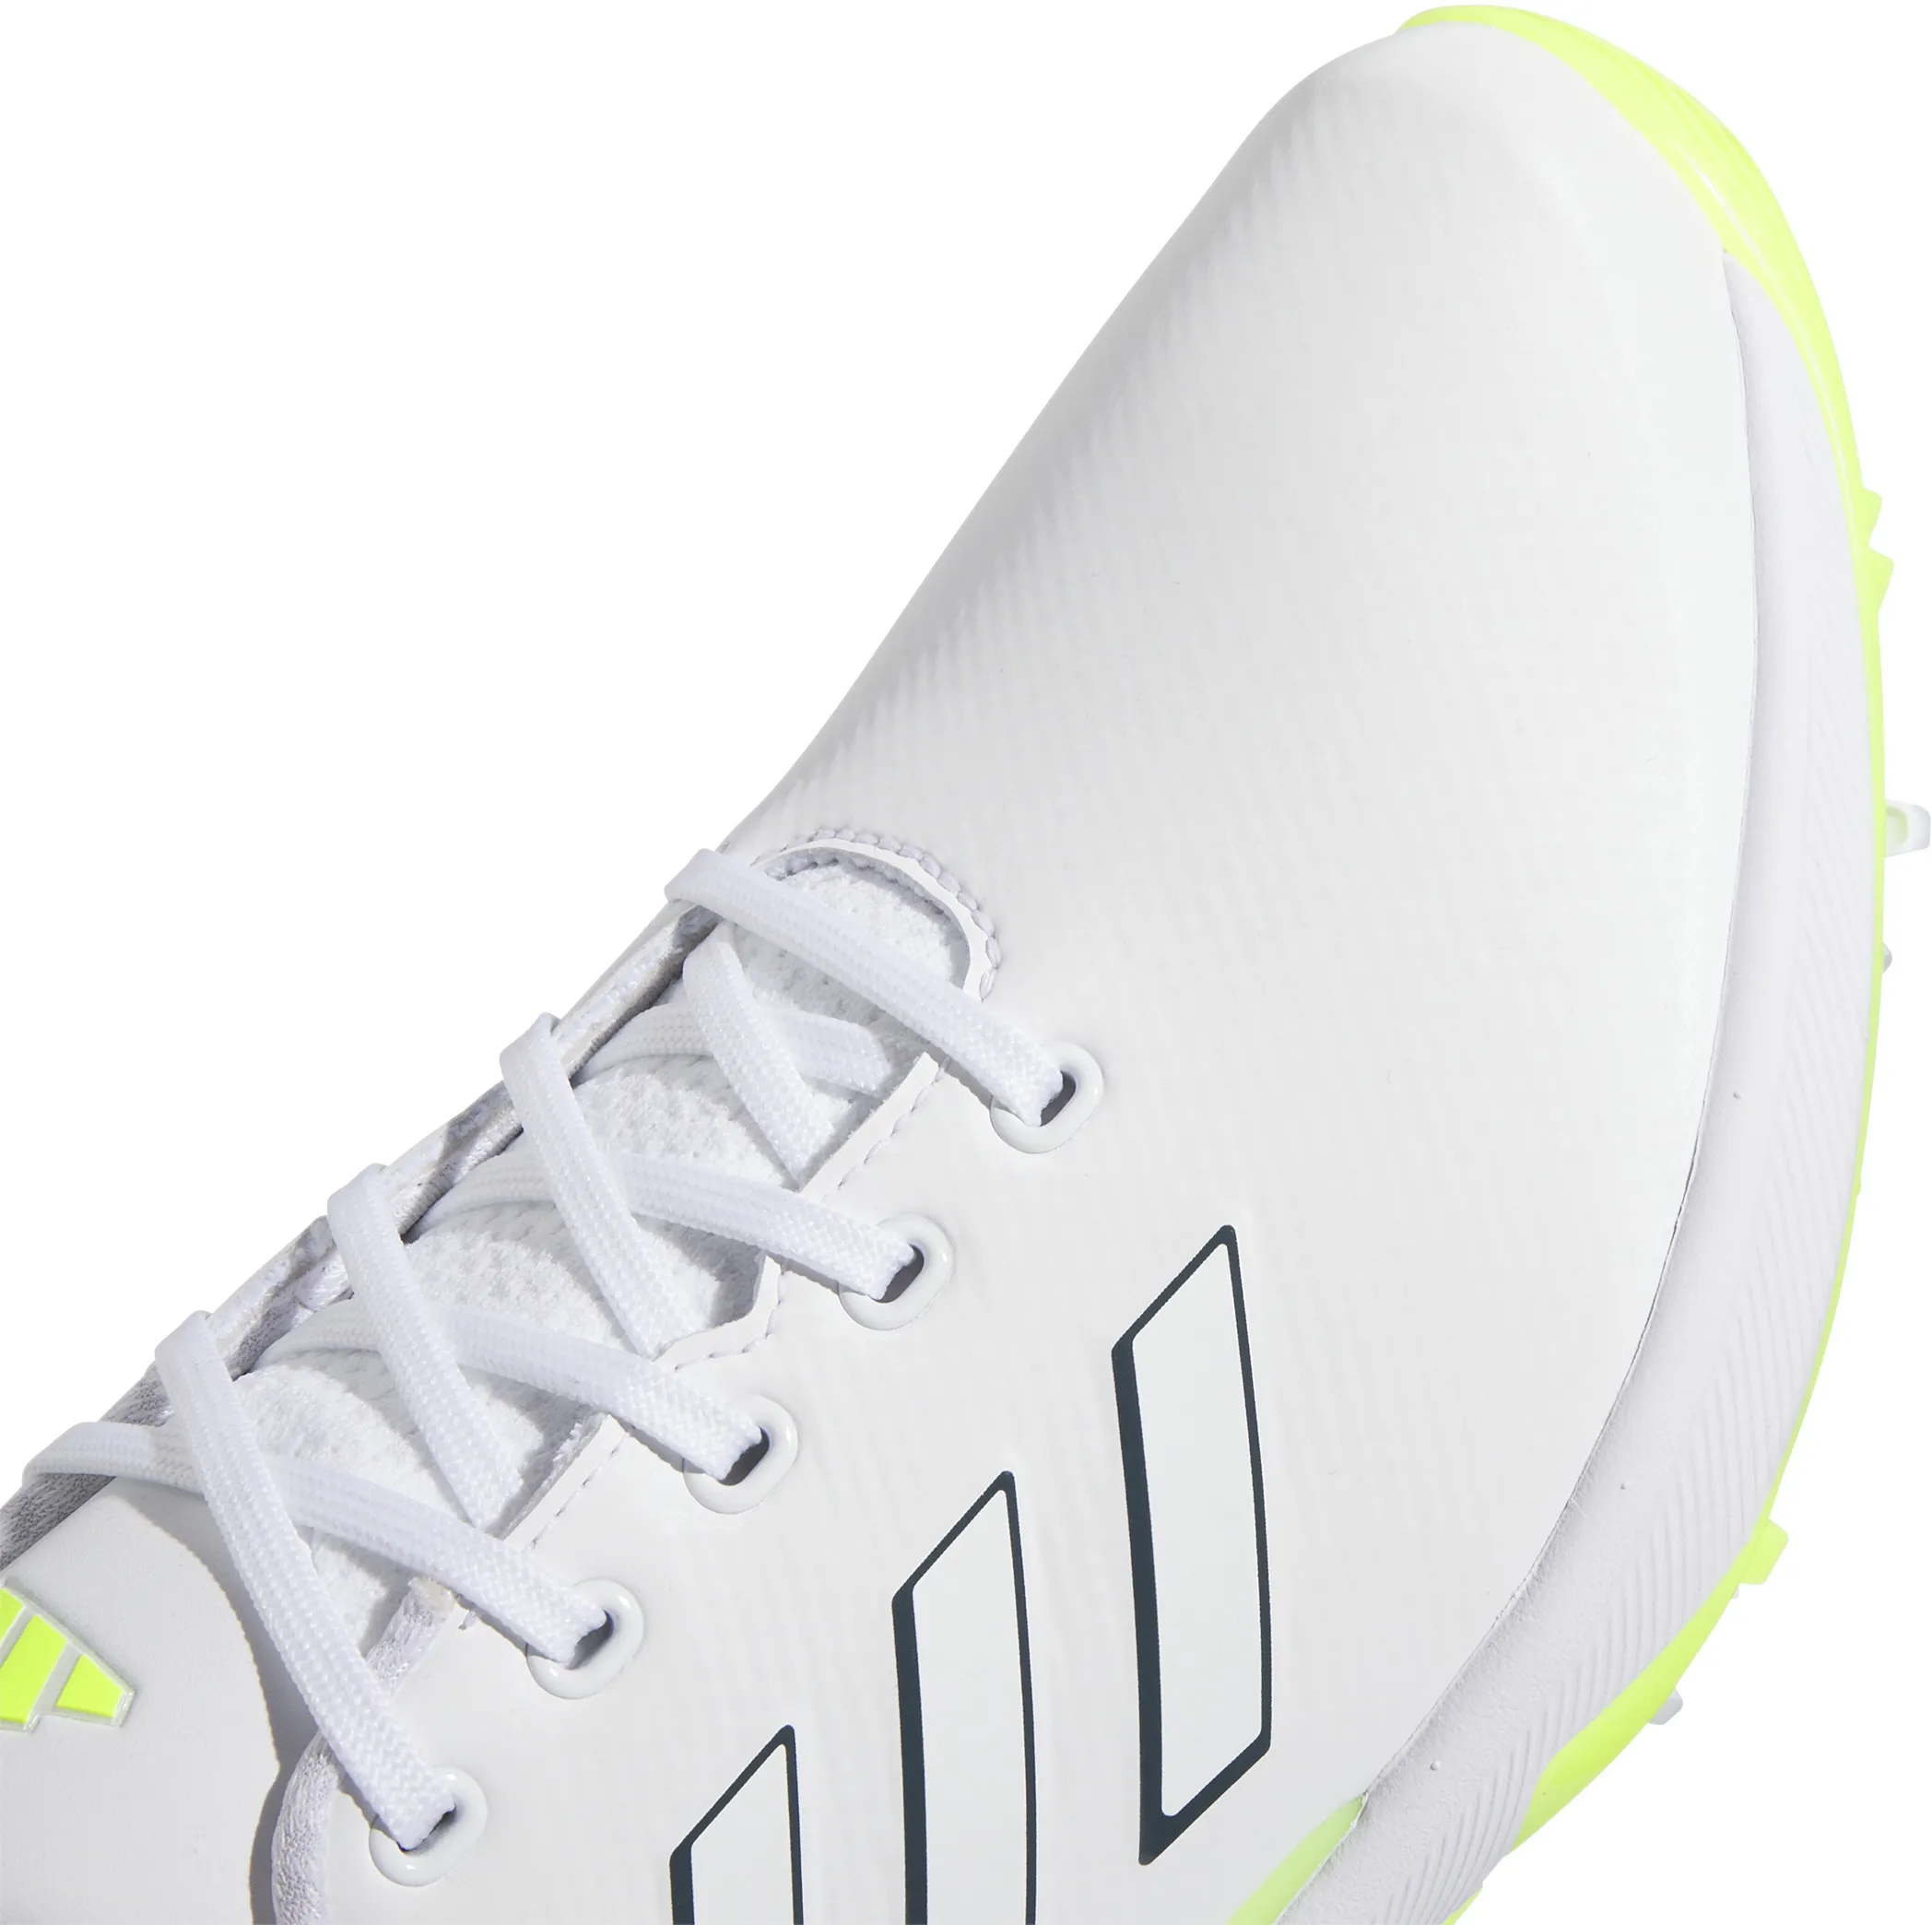 adidas ZG23 Golfschuh, white/arctic/lemon